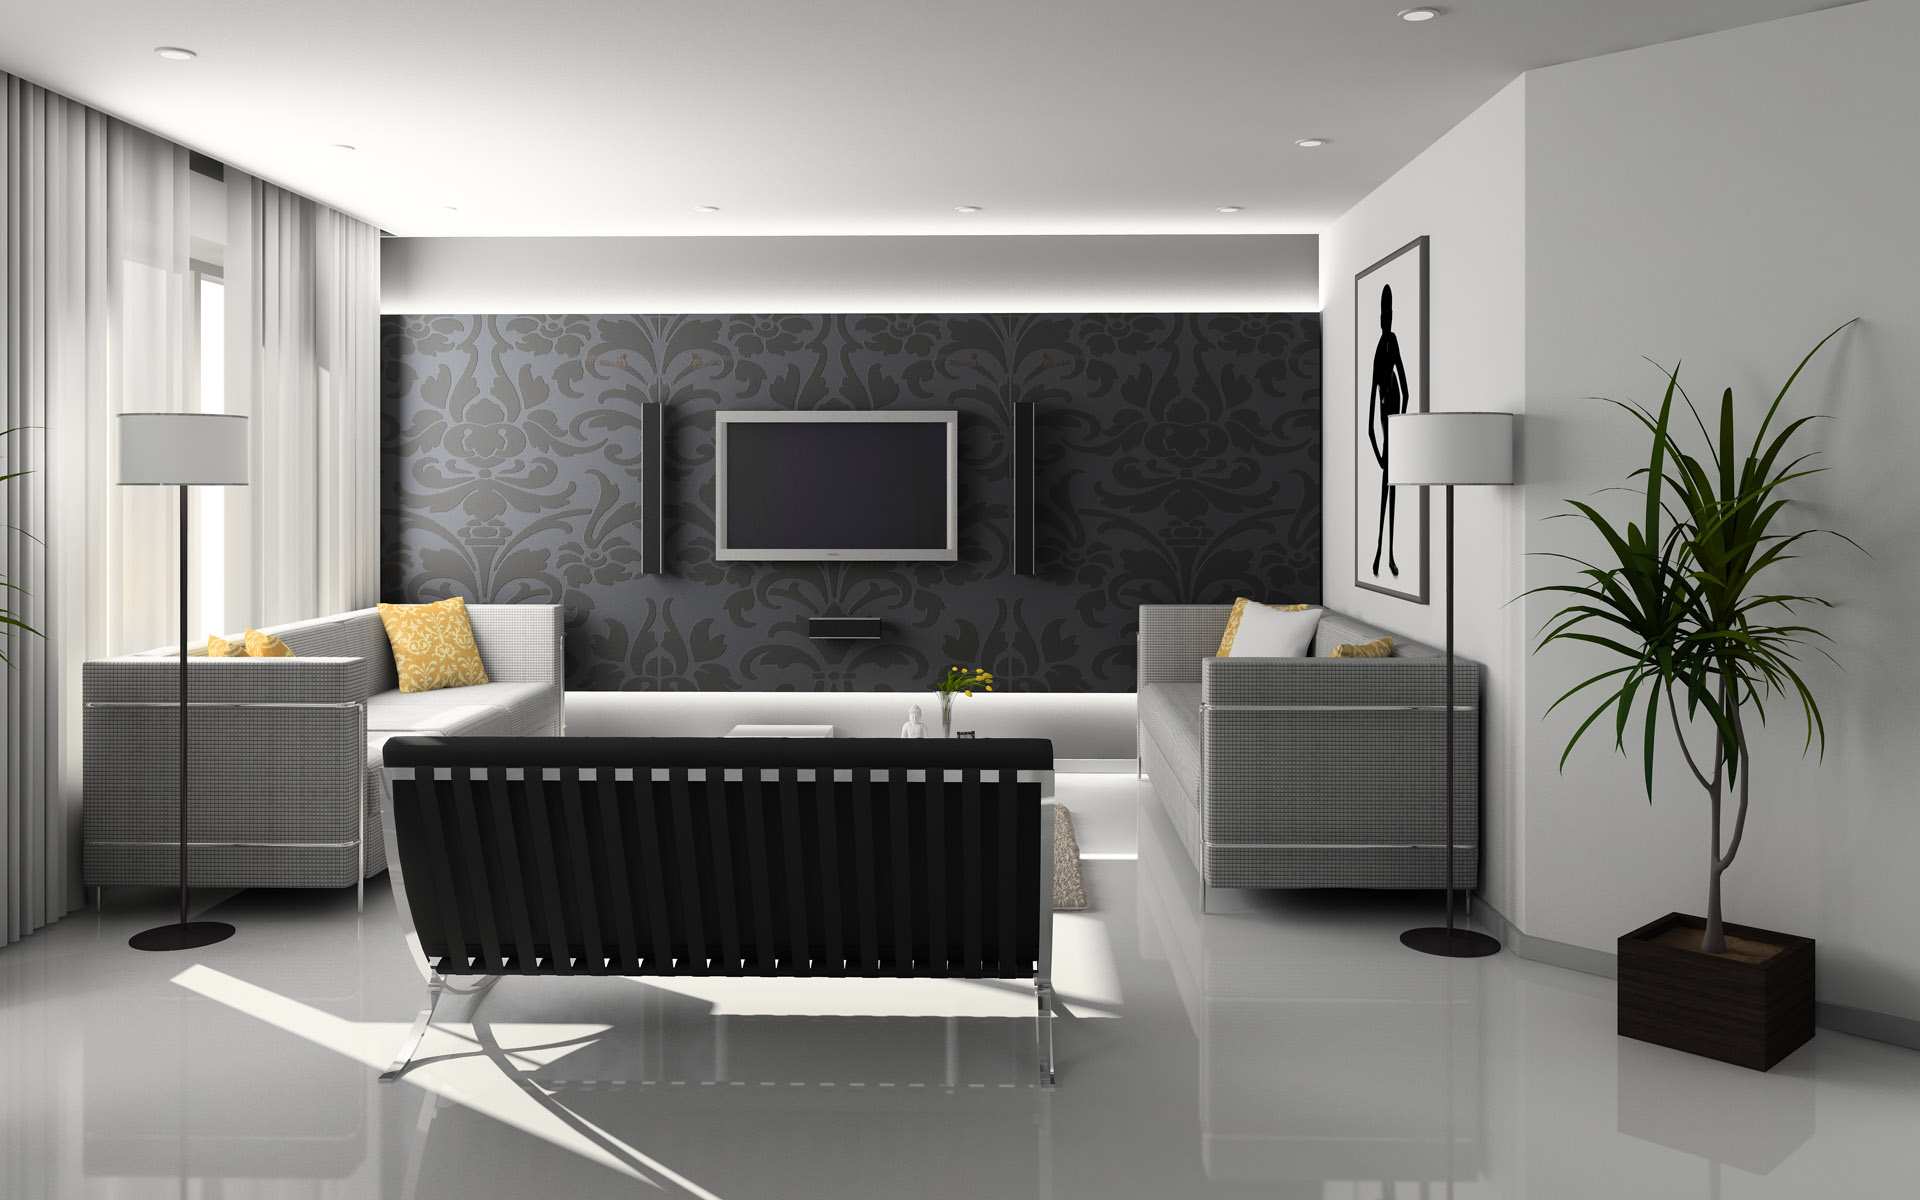 home-interior-design-ideas-414-home-interior-design-ideas1920-x-1200-142-kb-jpeg-x